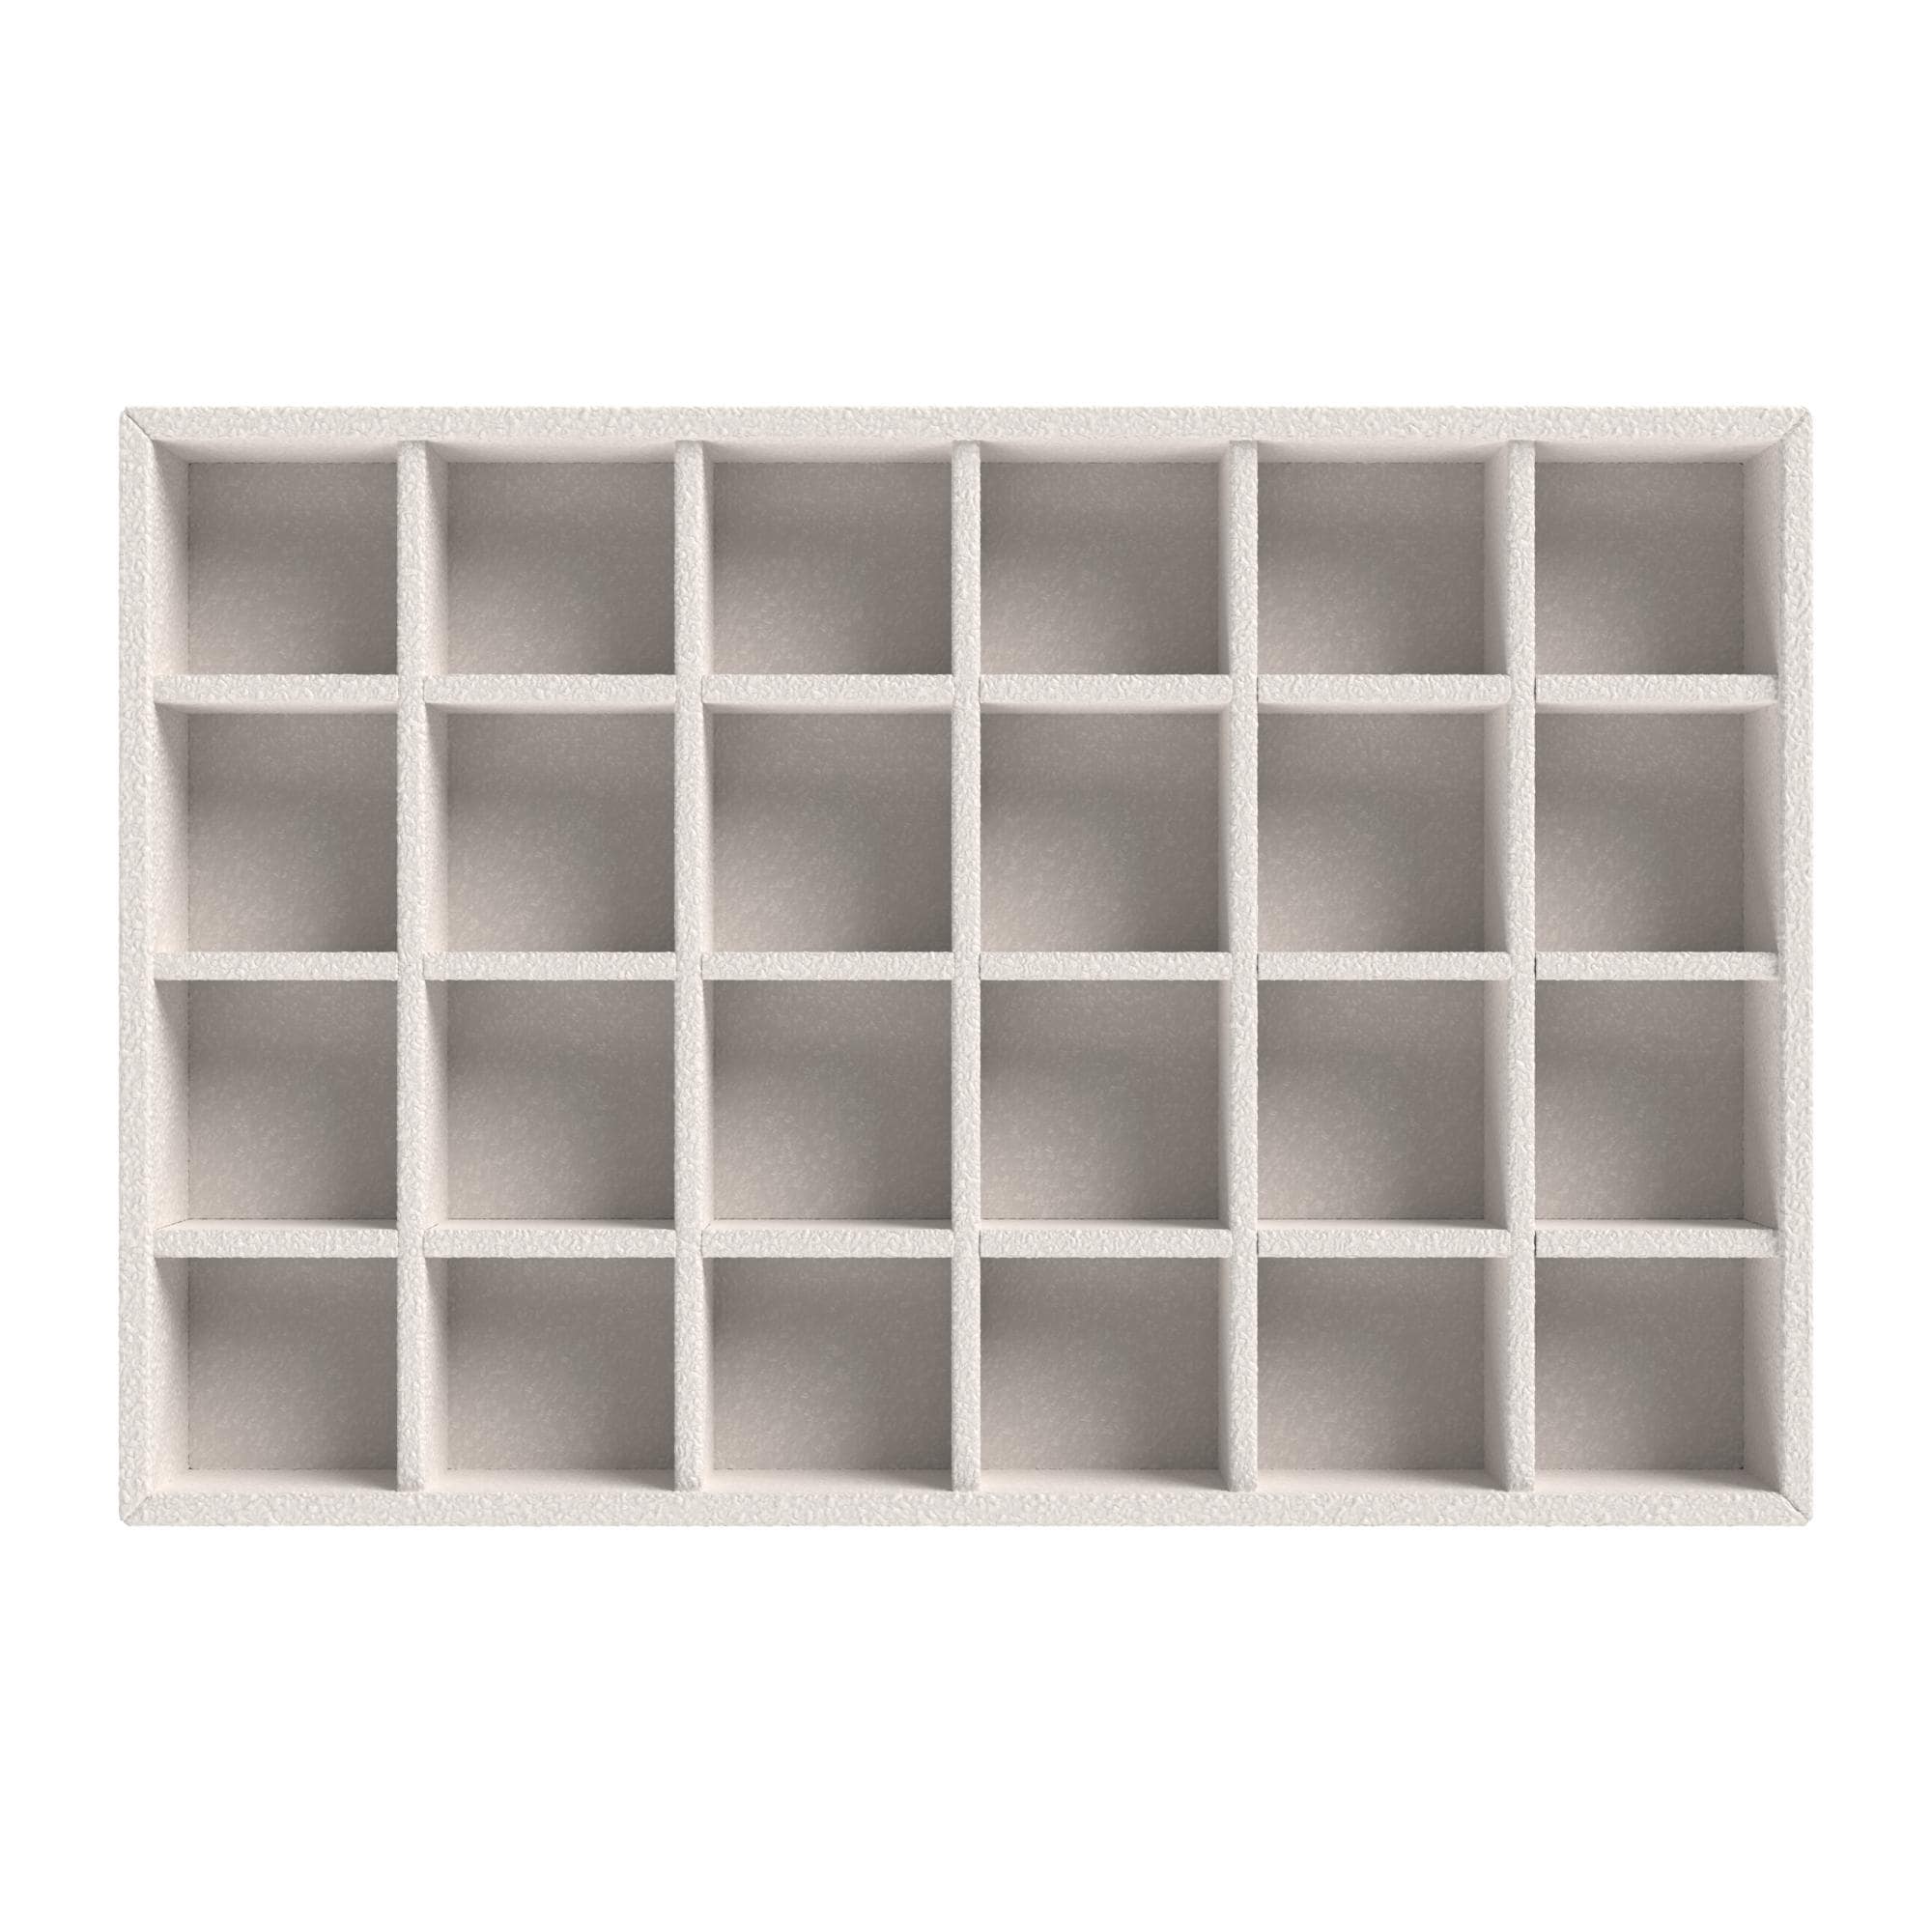 ClosetMaid Gray Velvet 3-Piece Jewelry Tray Set - Grey